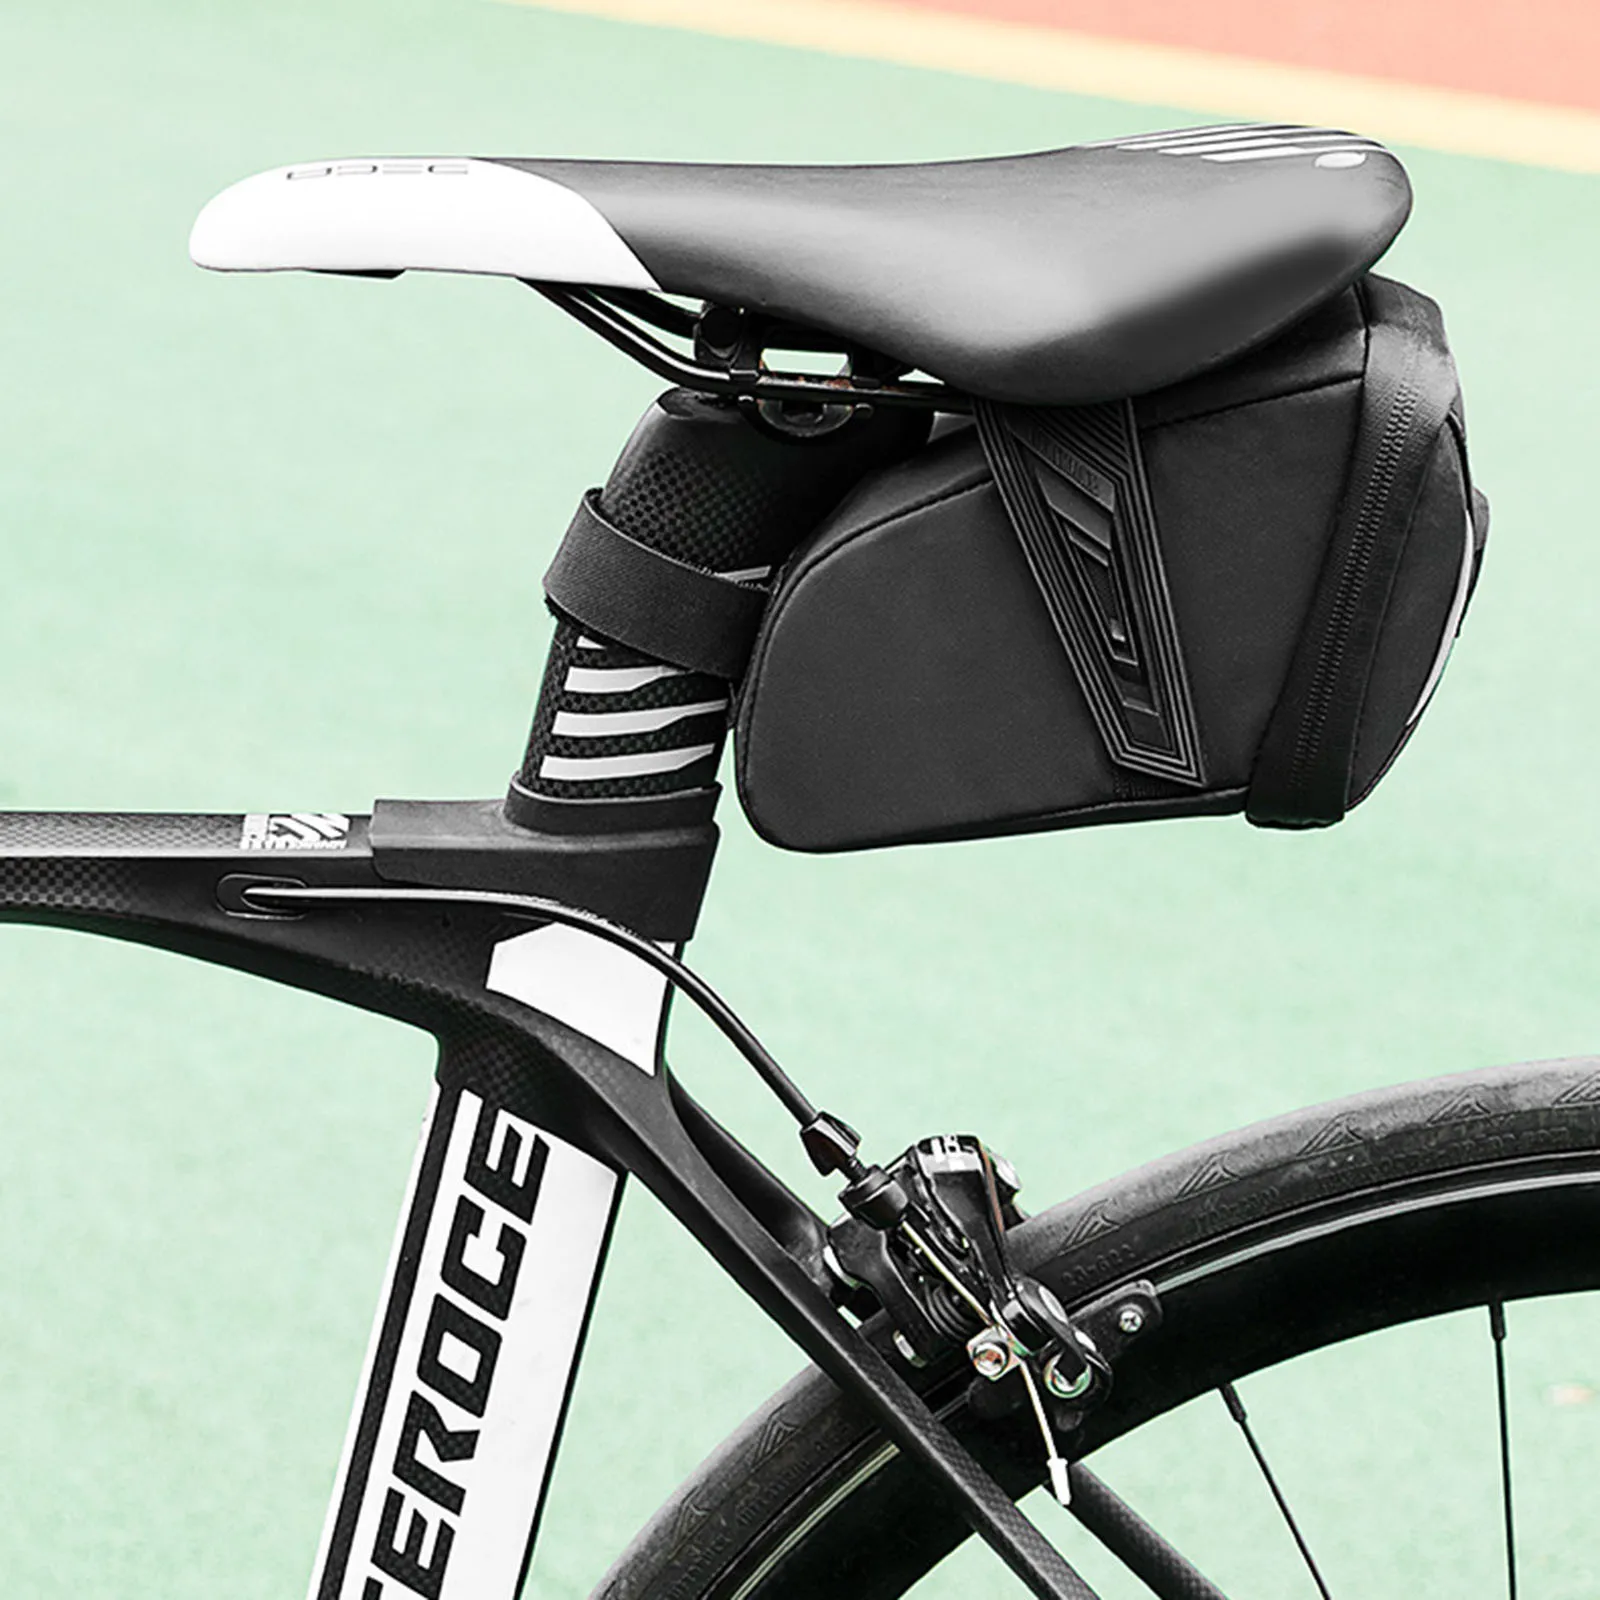 

1L Rainproof Bicycle Bag Shockproof Bike Saddle Bag For Refletive Rear Large Capatity Seatpost MTB Bike Bag Accessories